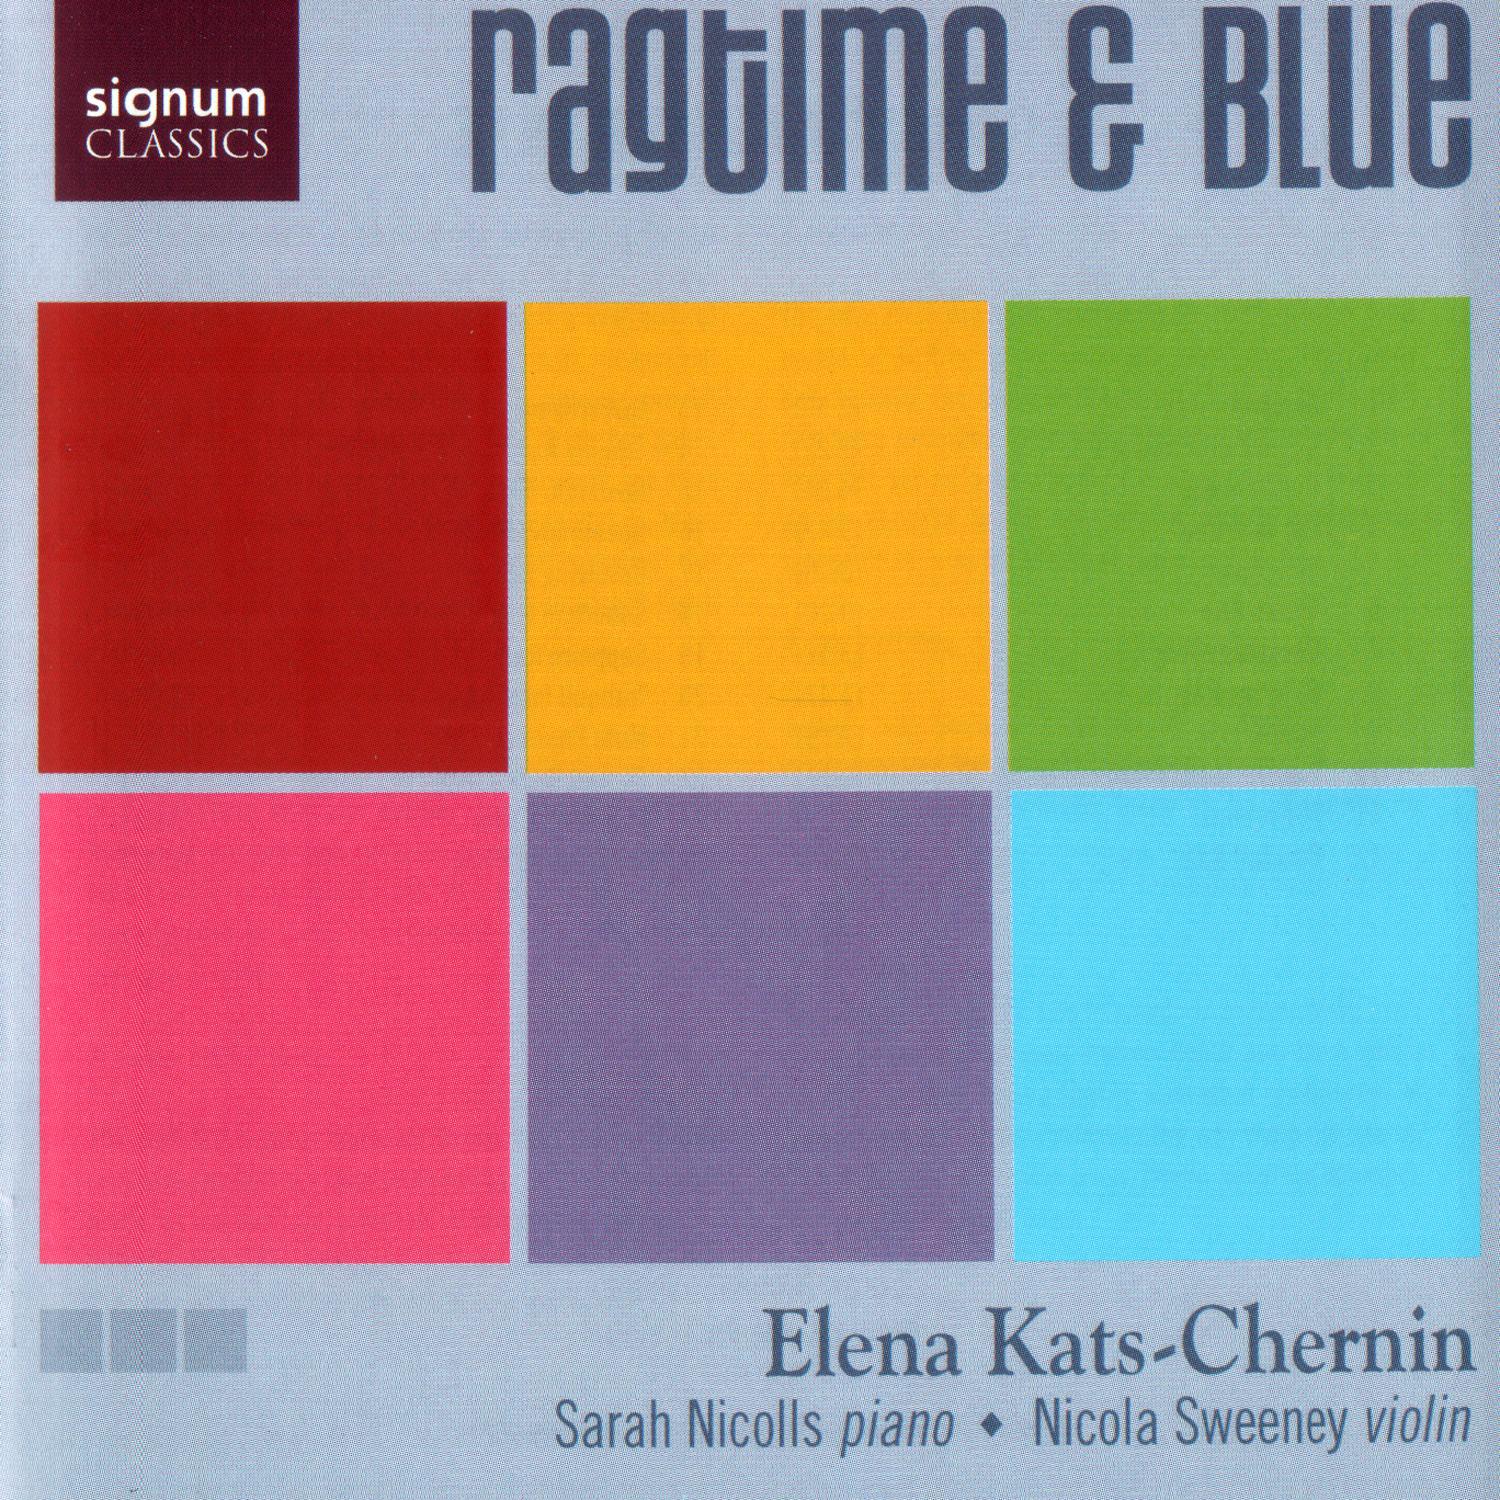 Ragtime & Blue